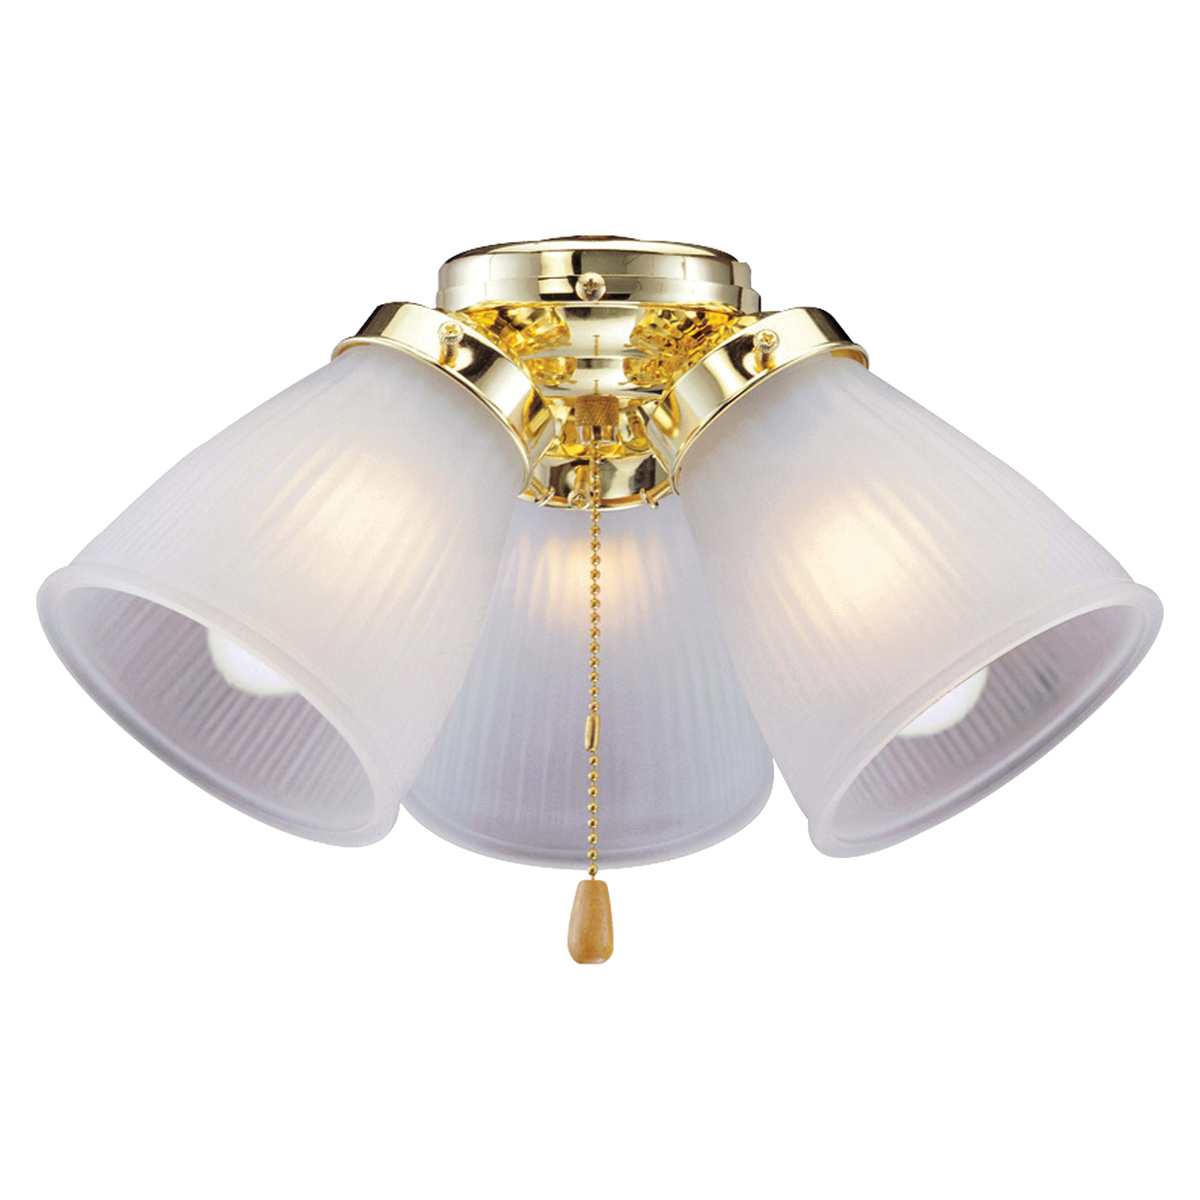 Ceiling Fan Light Kit, Frosted Glass, Polished Brass, Polished Brass